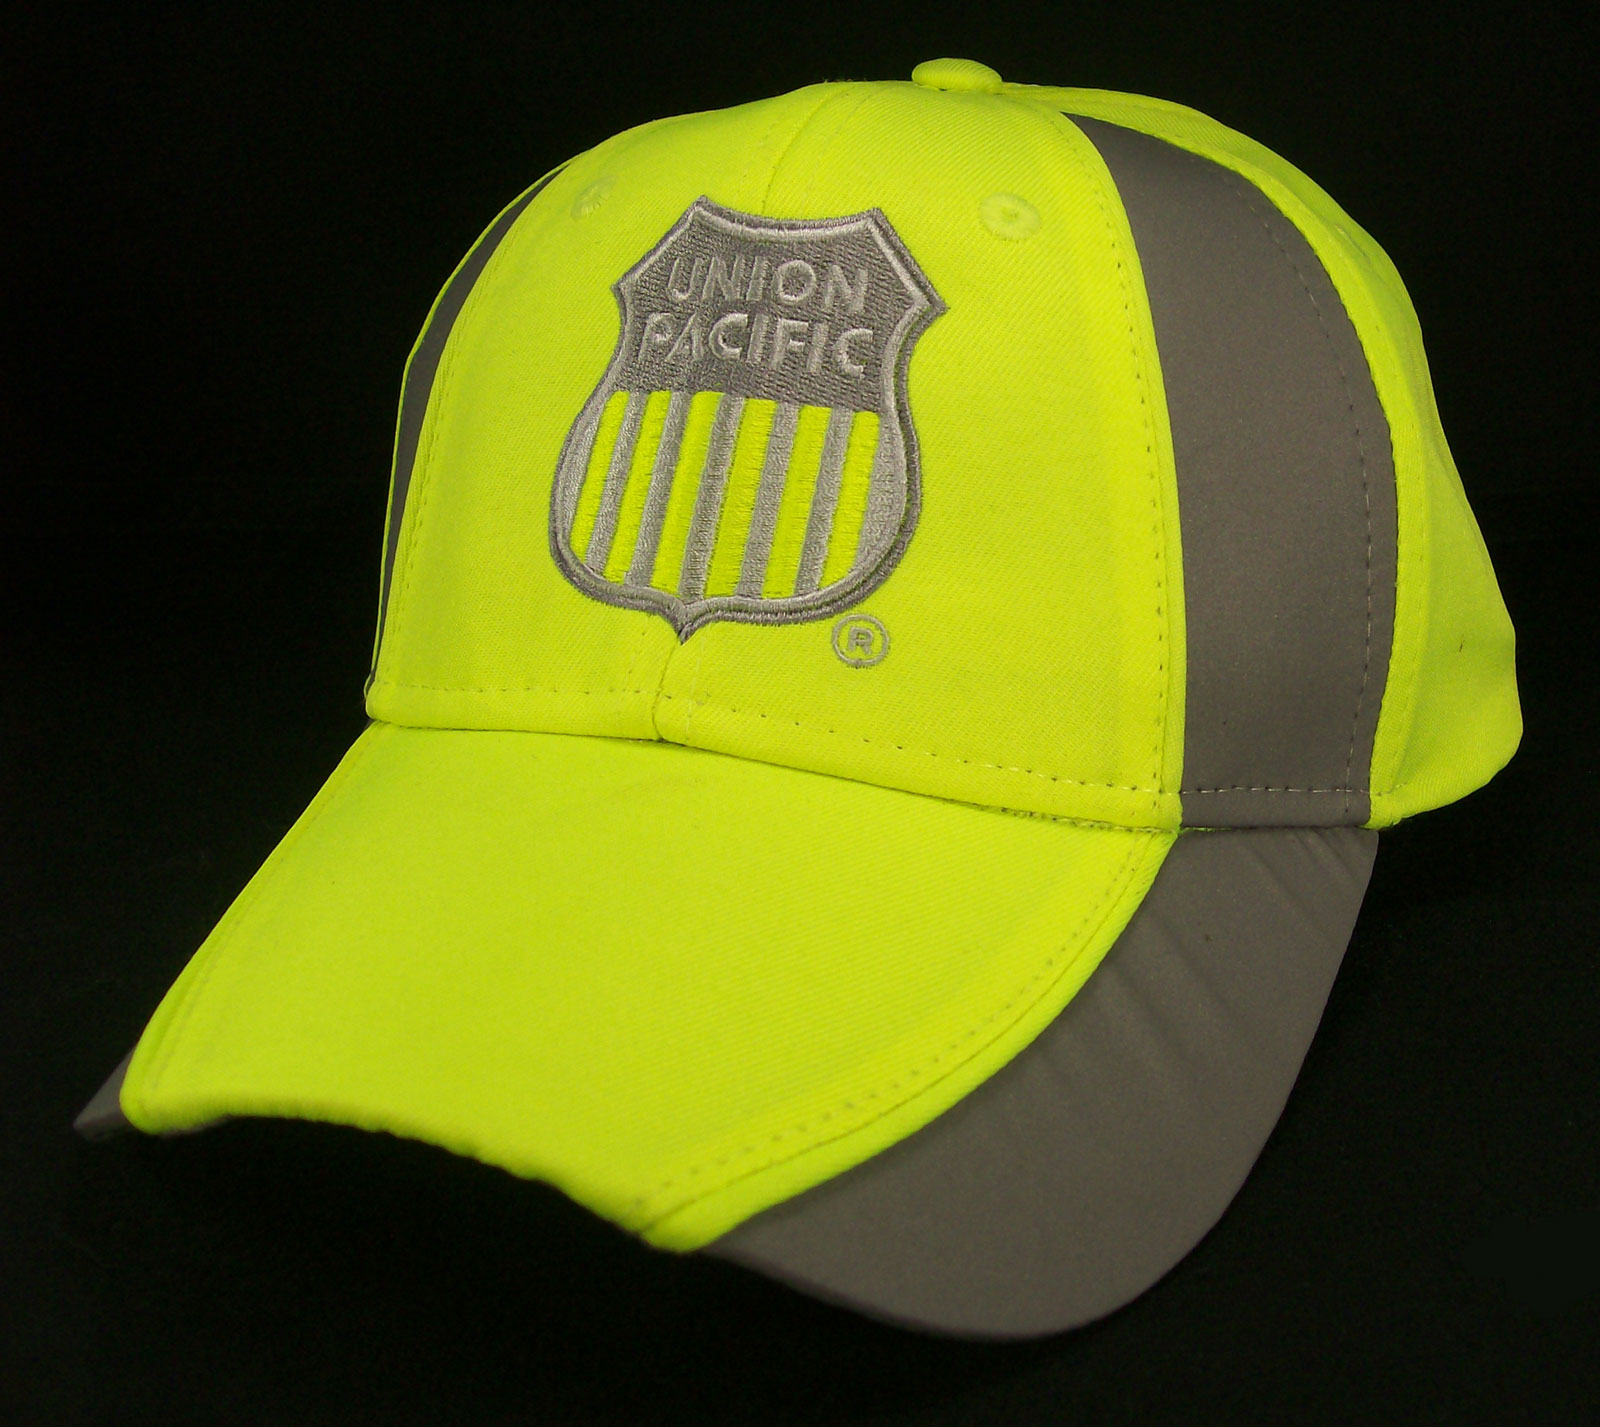 BNSF Railway Swoosh Neon Orange or Yellow Reflective Cap Hat #40-0048S 